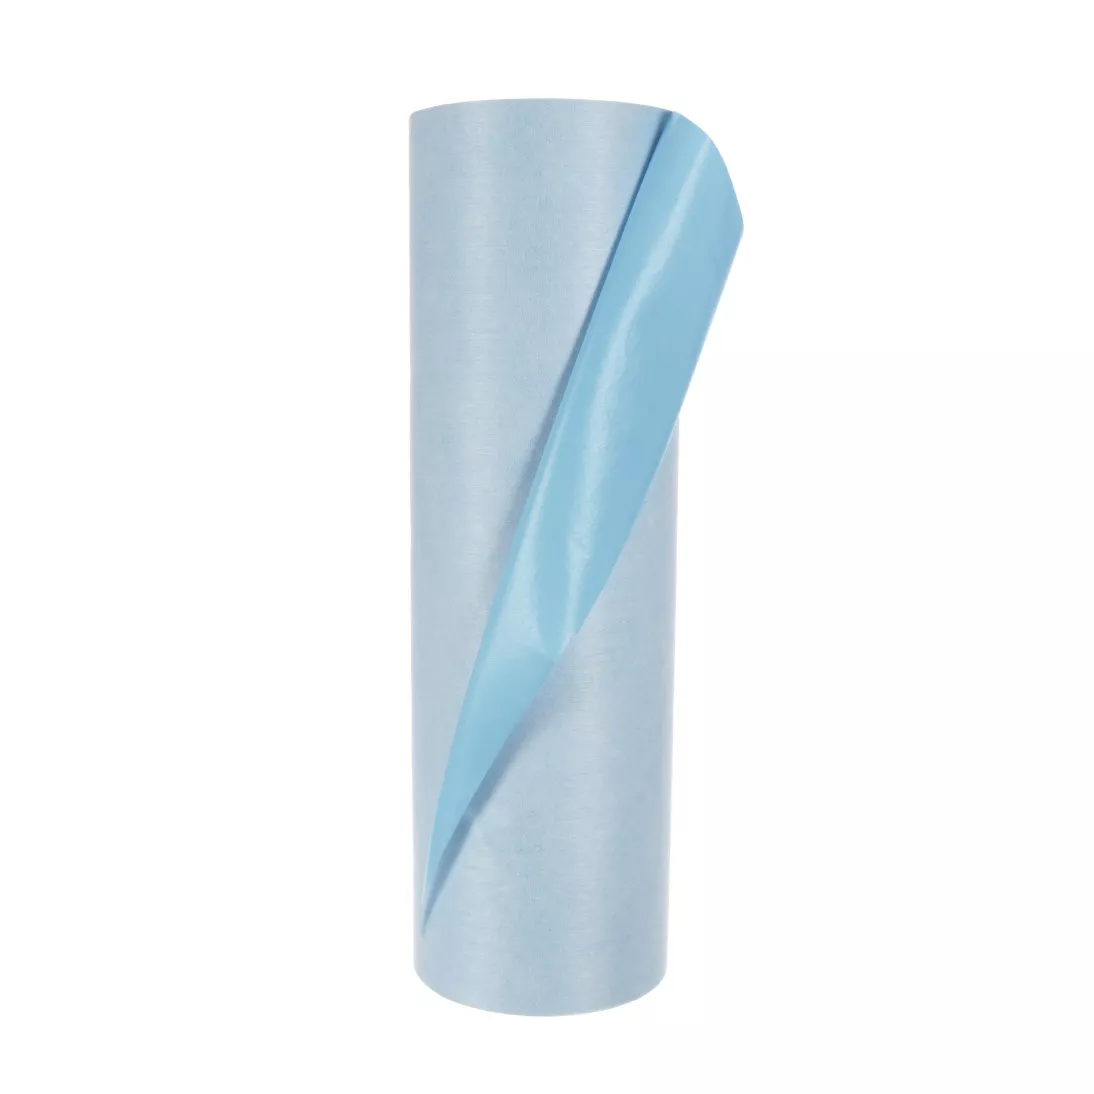 3M™ Self-Stick Liquid Protection Fabric, 51005, Blue, 28 in x 100 ft, 1
roll per case